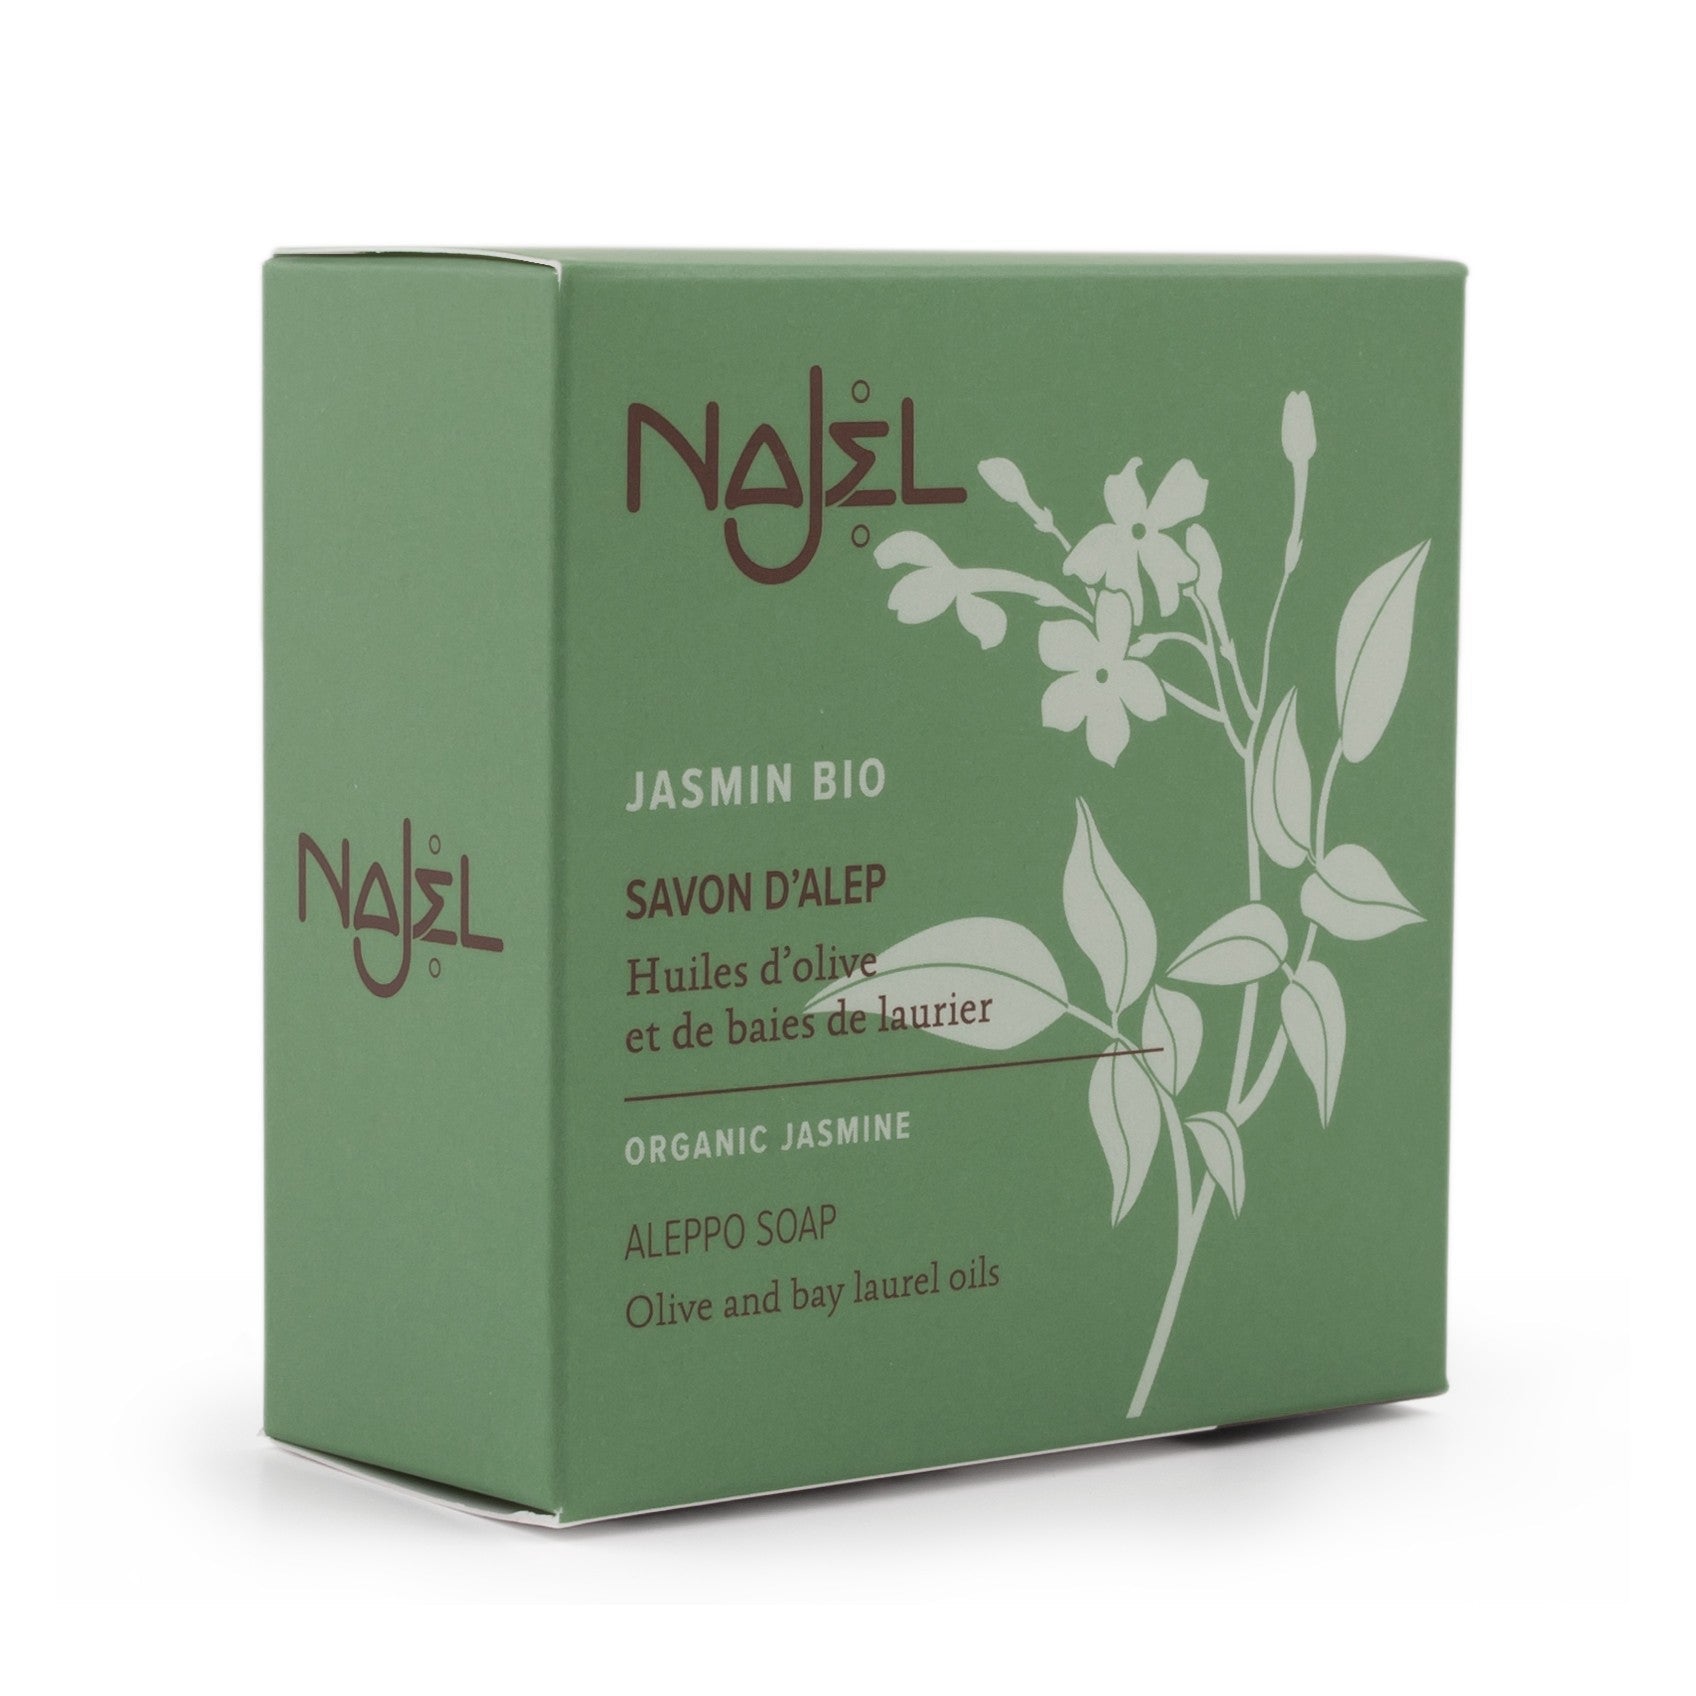 NAJEL Organic Skincare - Aleppo Soap Organic Jasmine, 100g, Organic, Vegan